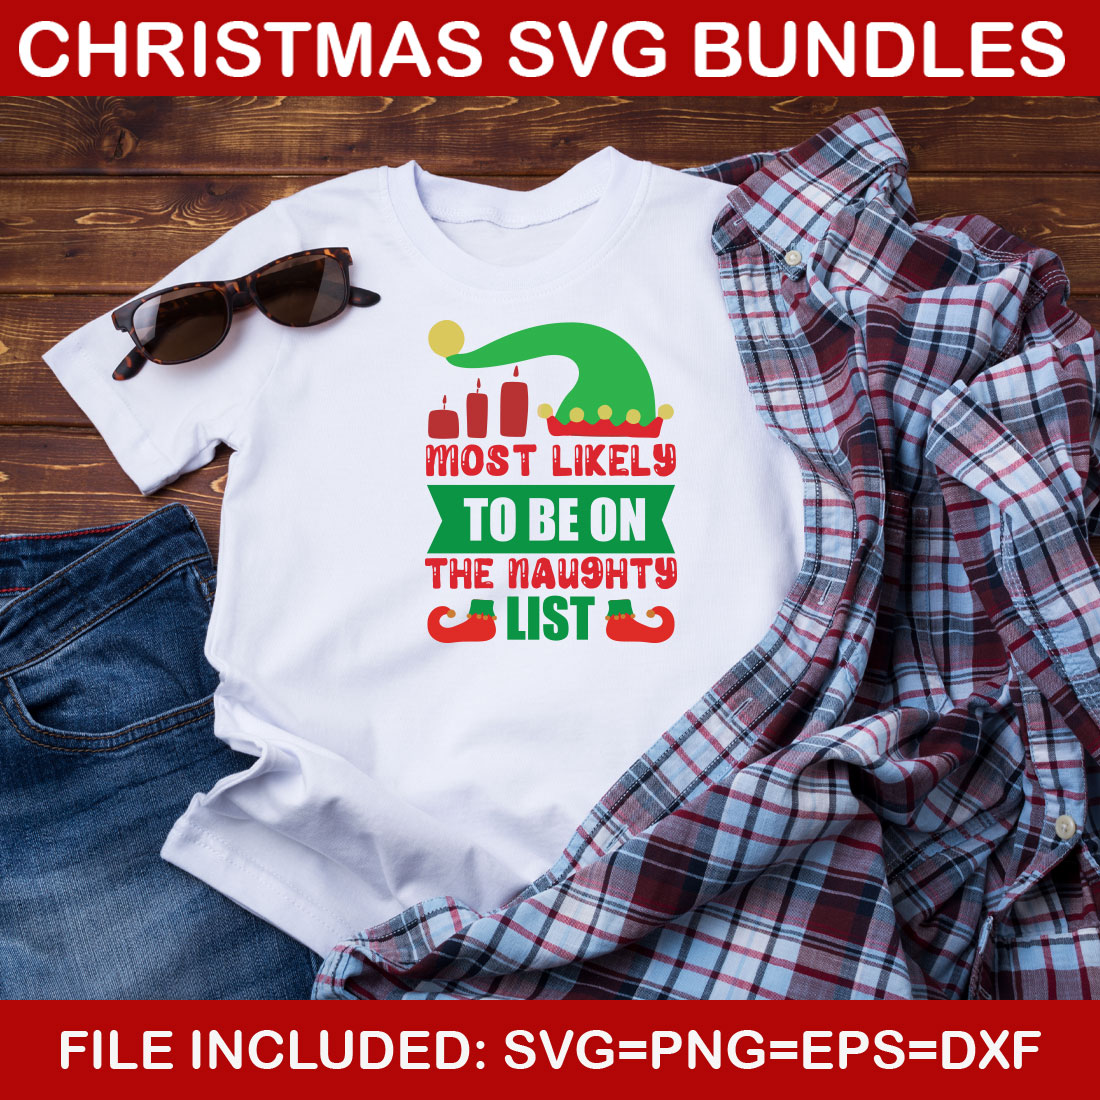 Free Ultimate List! 7 Christmas SVG Bundles preview image.